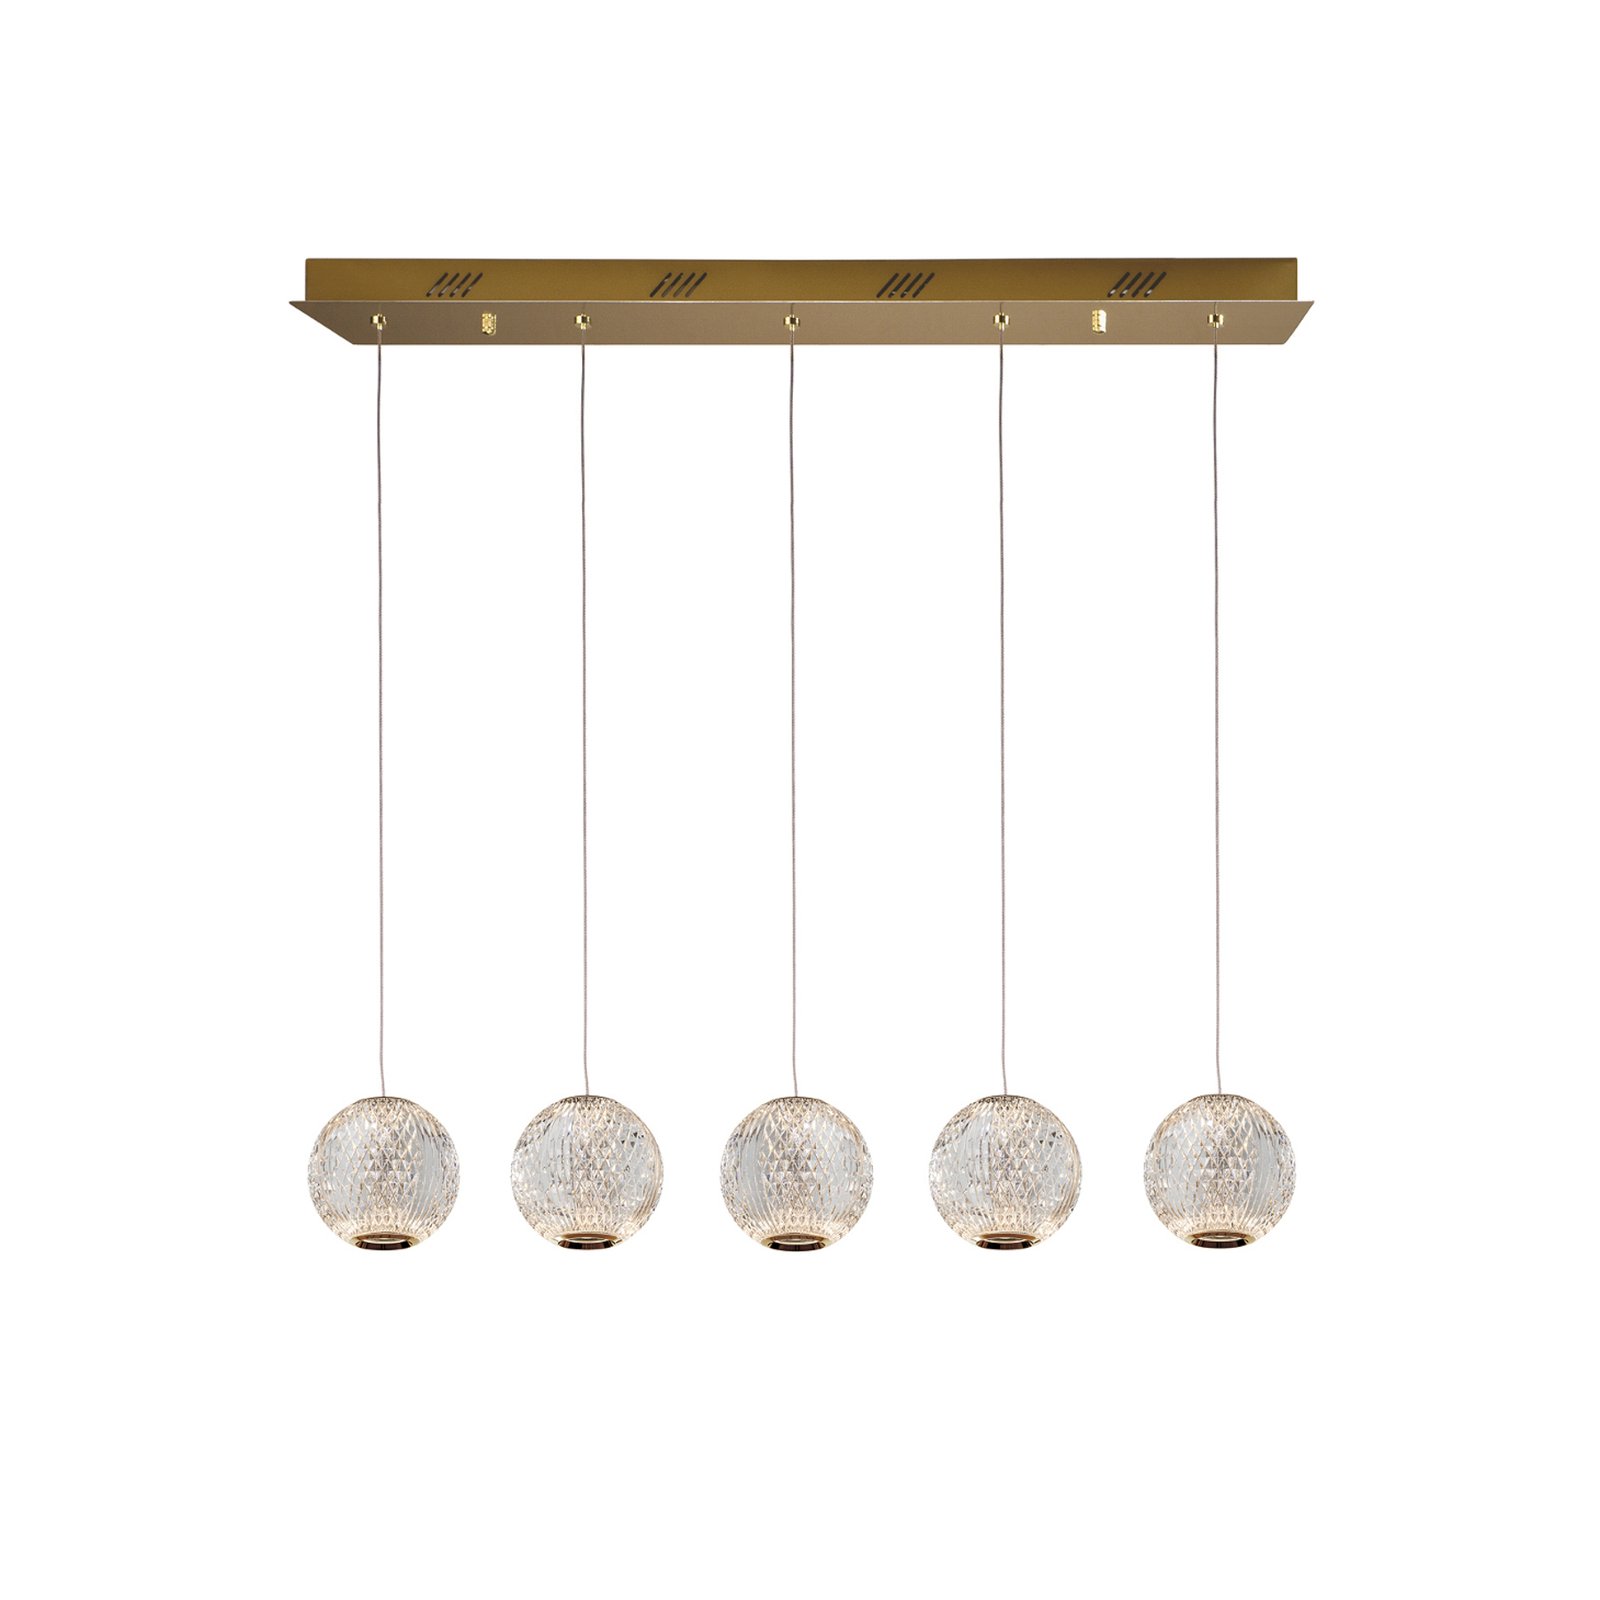 Austral LED pendant light, gold/clear 5-bulb, long